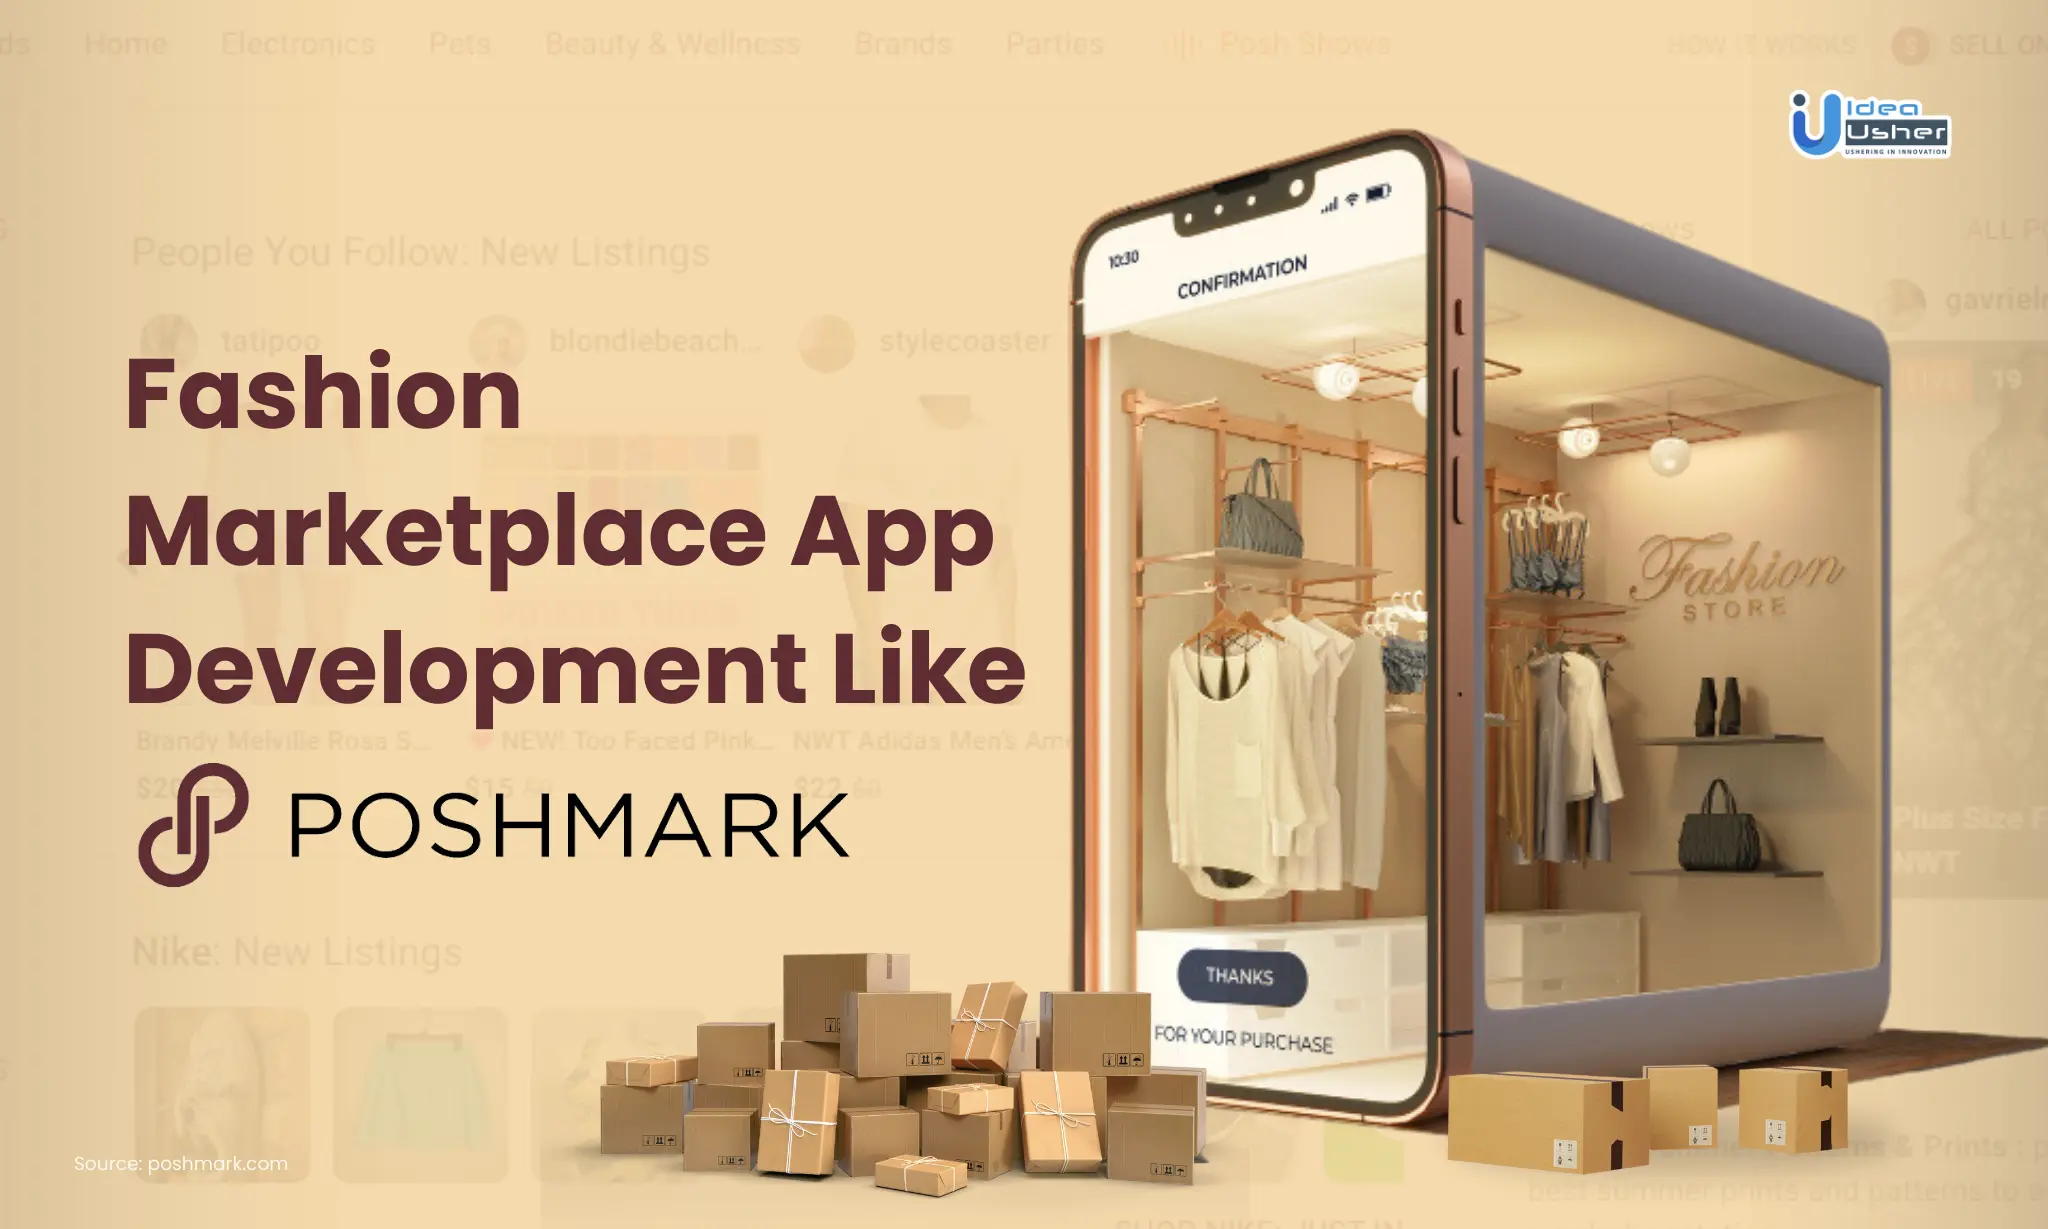 Poshmark-like Fashion Marketplace App Development